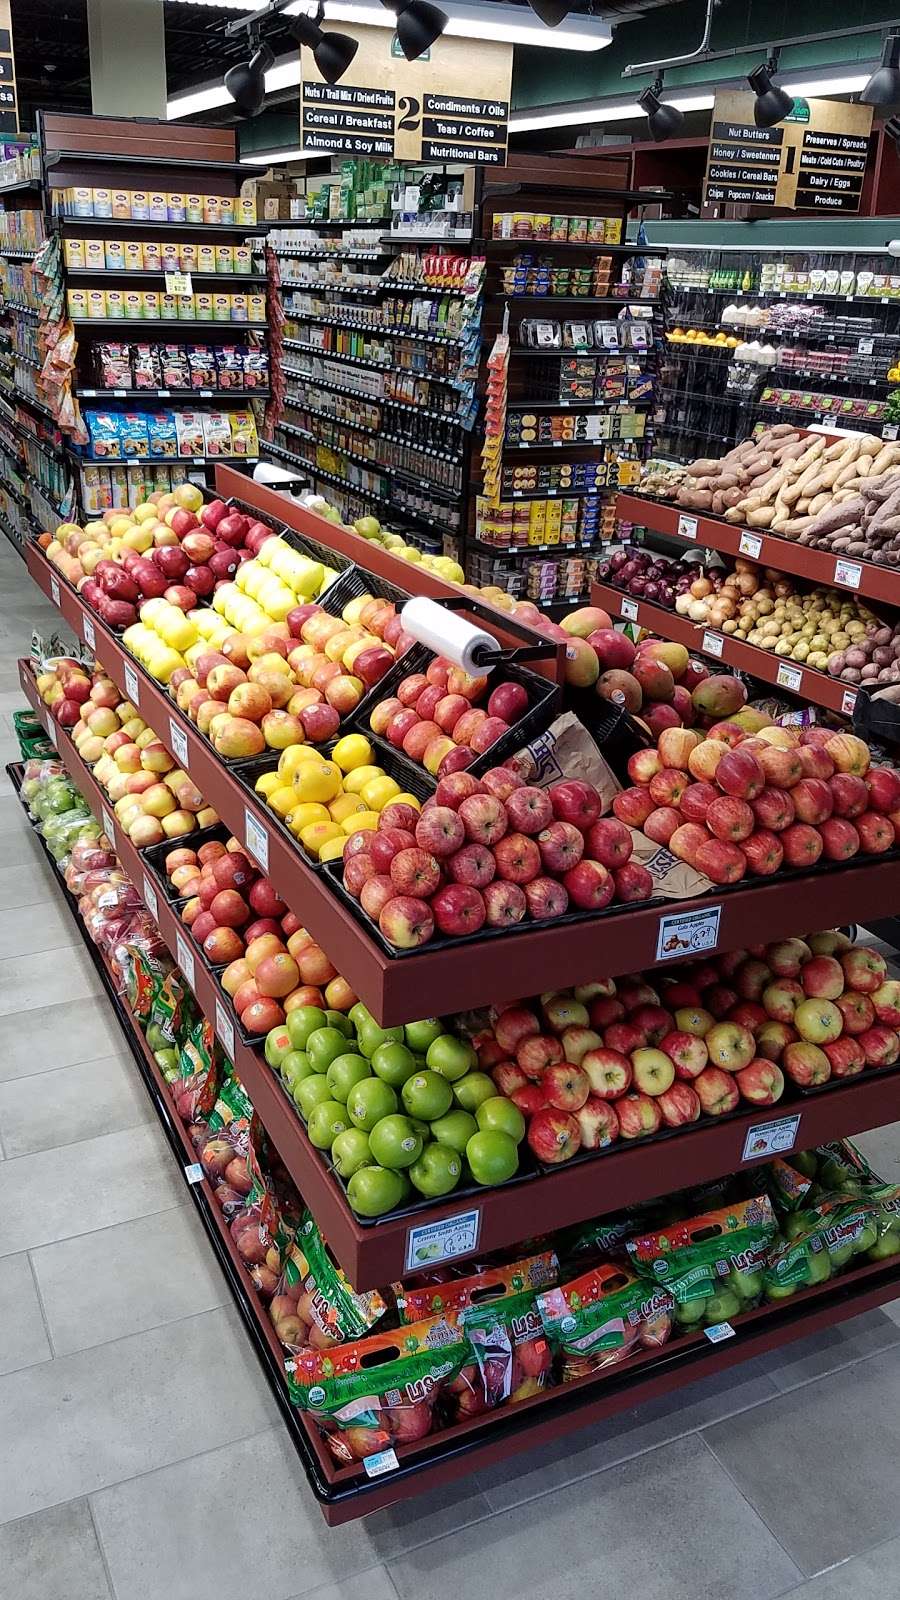 Green Organic Market | 275 S Central Ave, Hartsdale, NY 10530, USA | Phone: (914) 437-8645